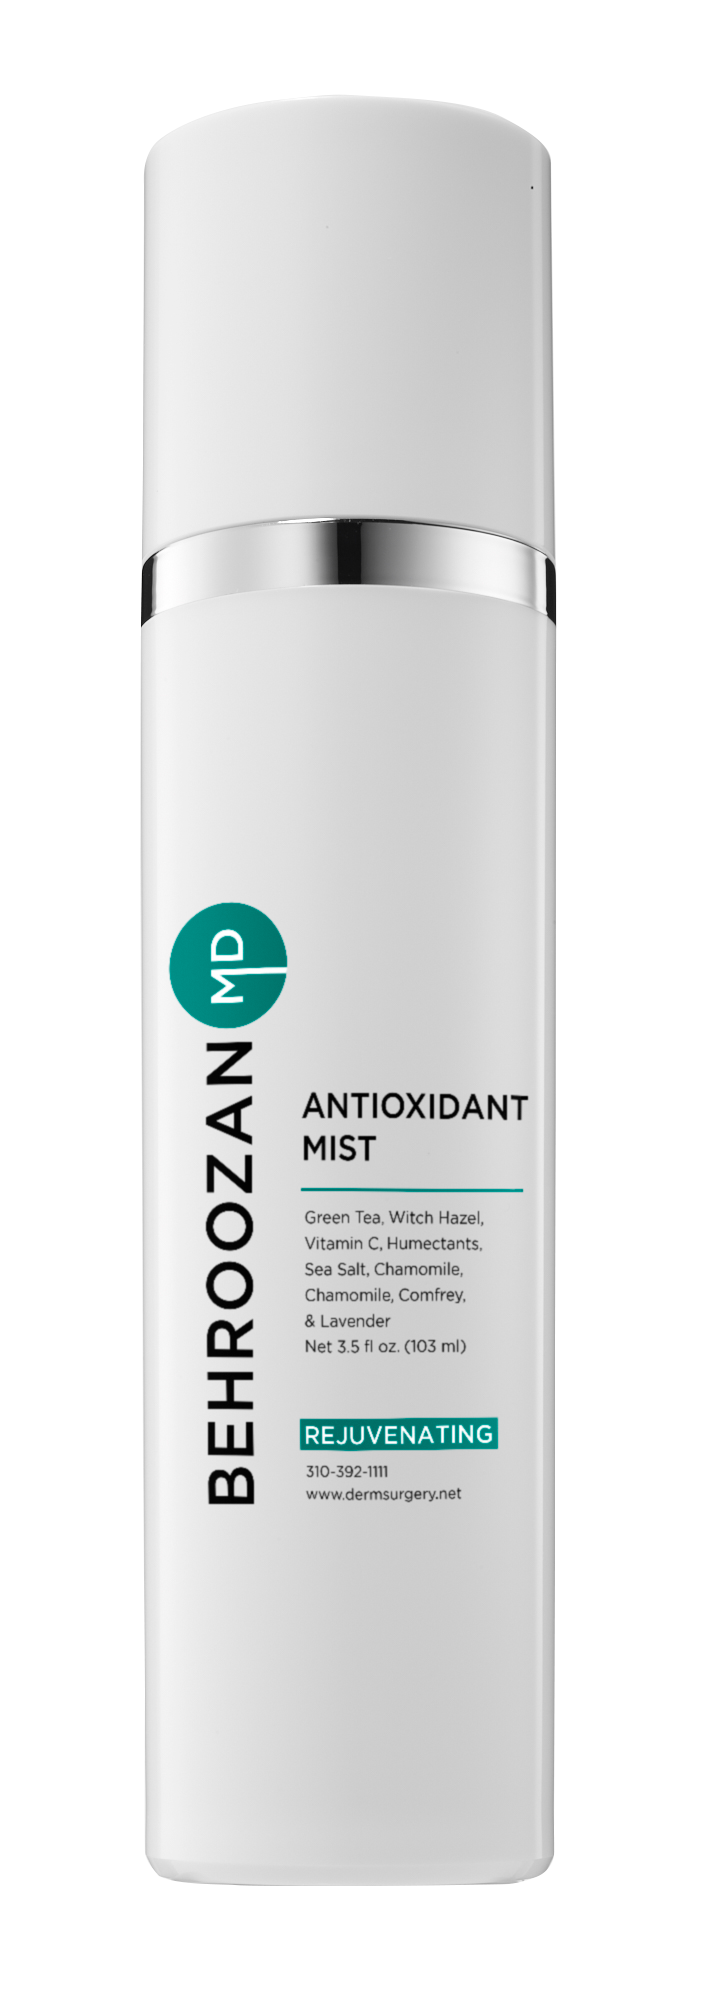 Antioxidant Mist